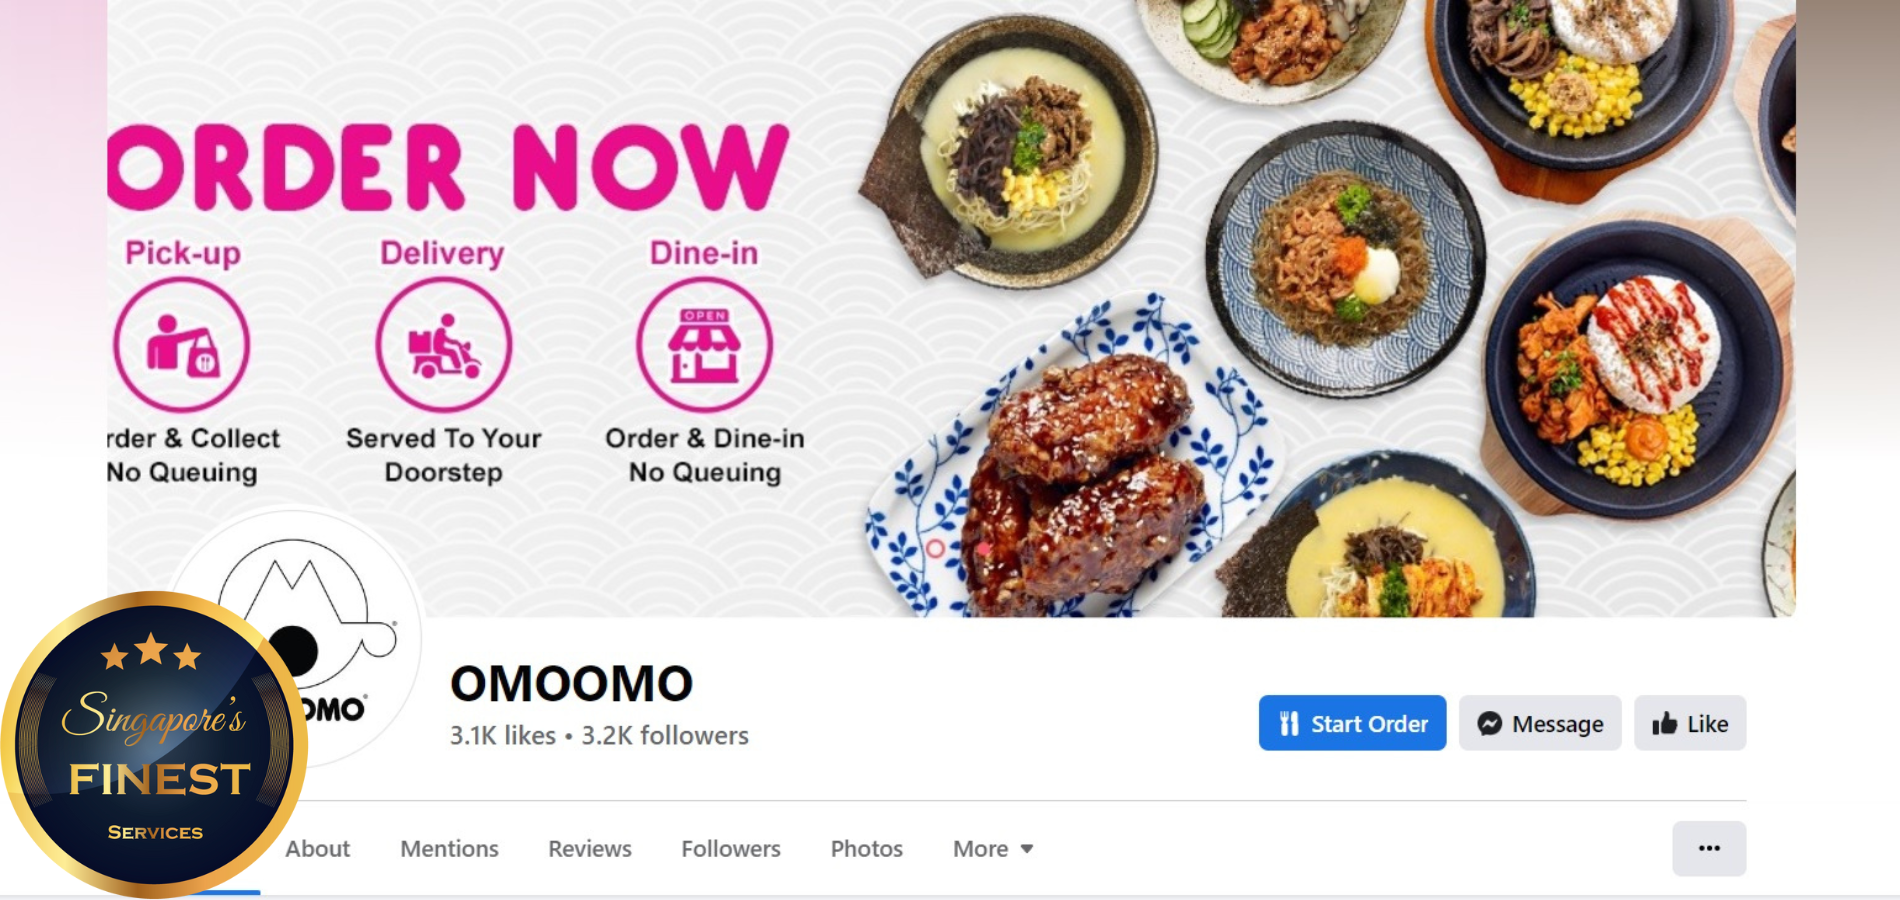 10 Best Halal Japanese Restaurants in Singapore